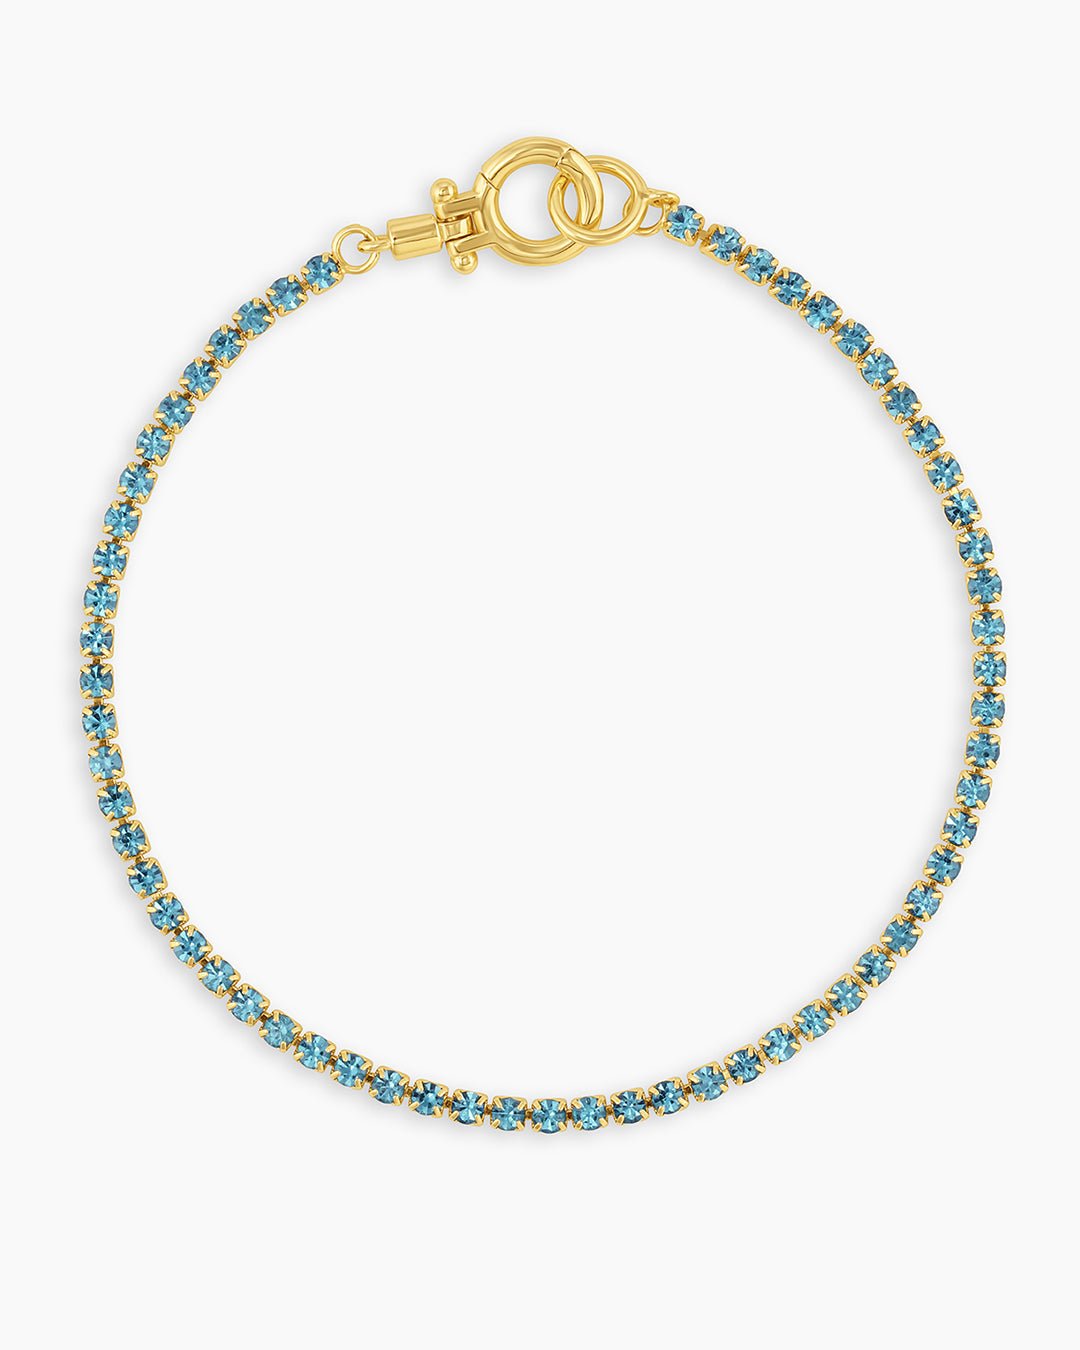  Lexi Bracelet Aqua || option::Gold Plated, Aqua